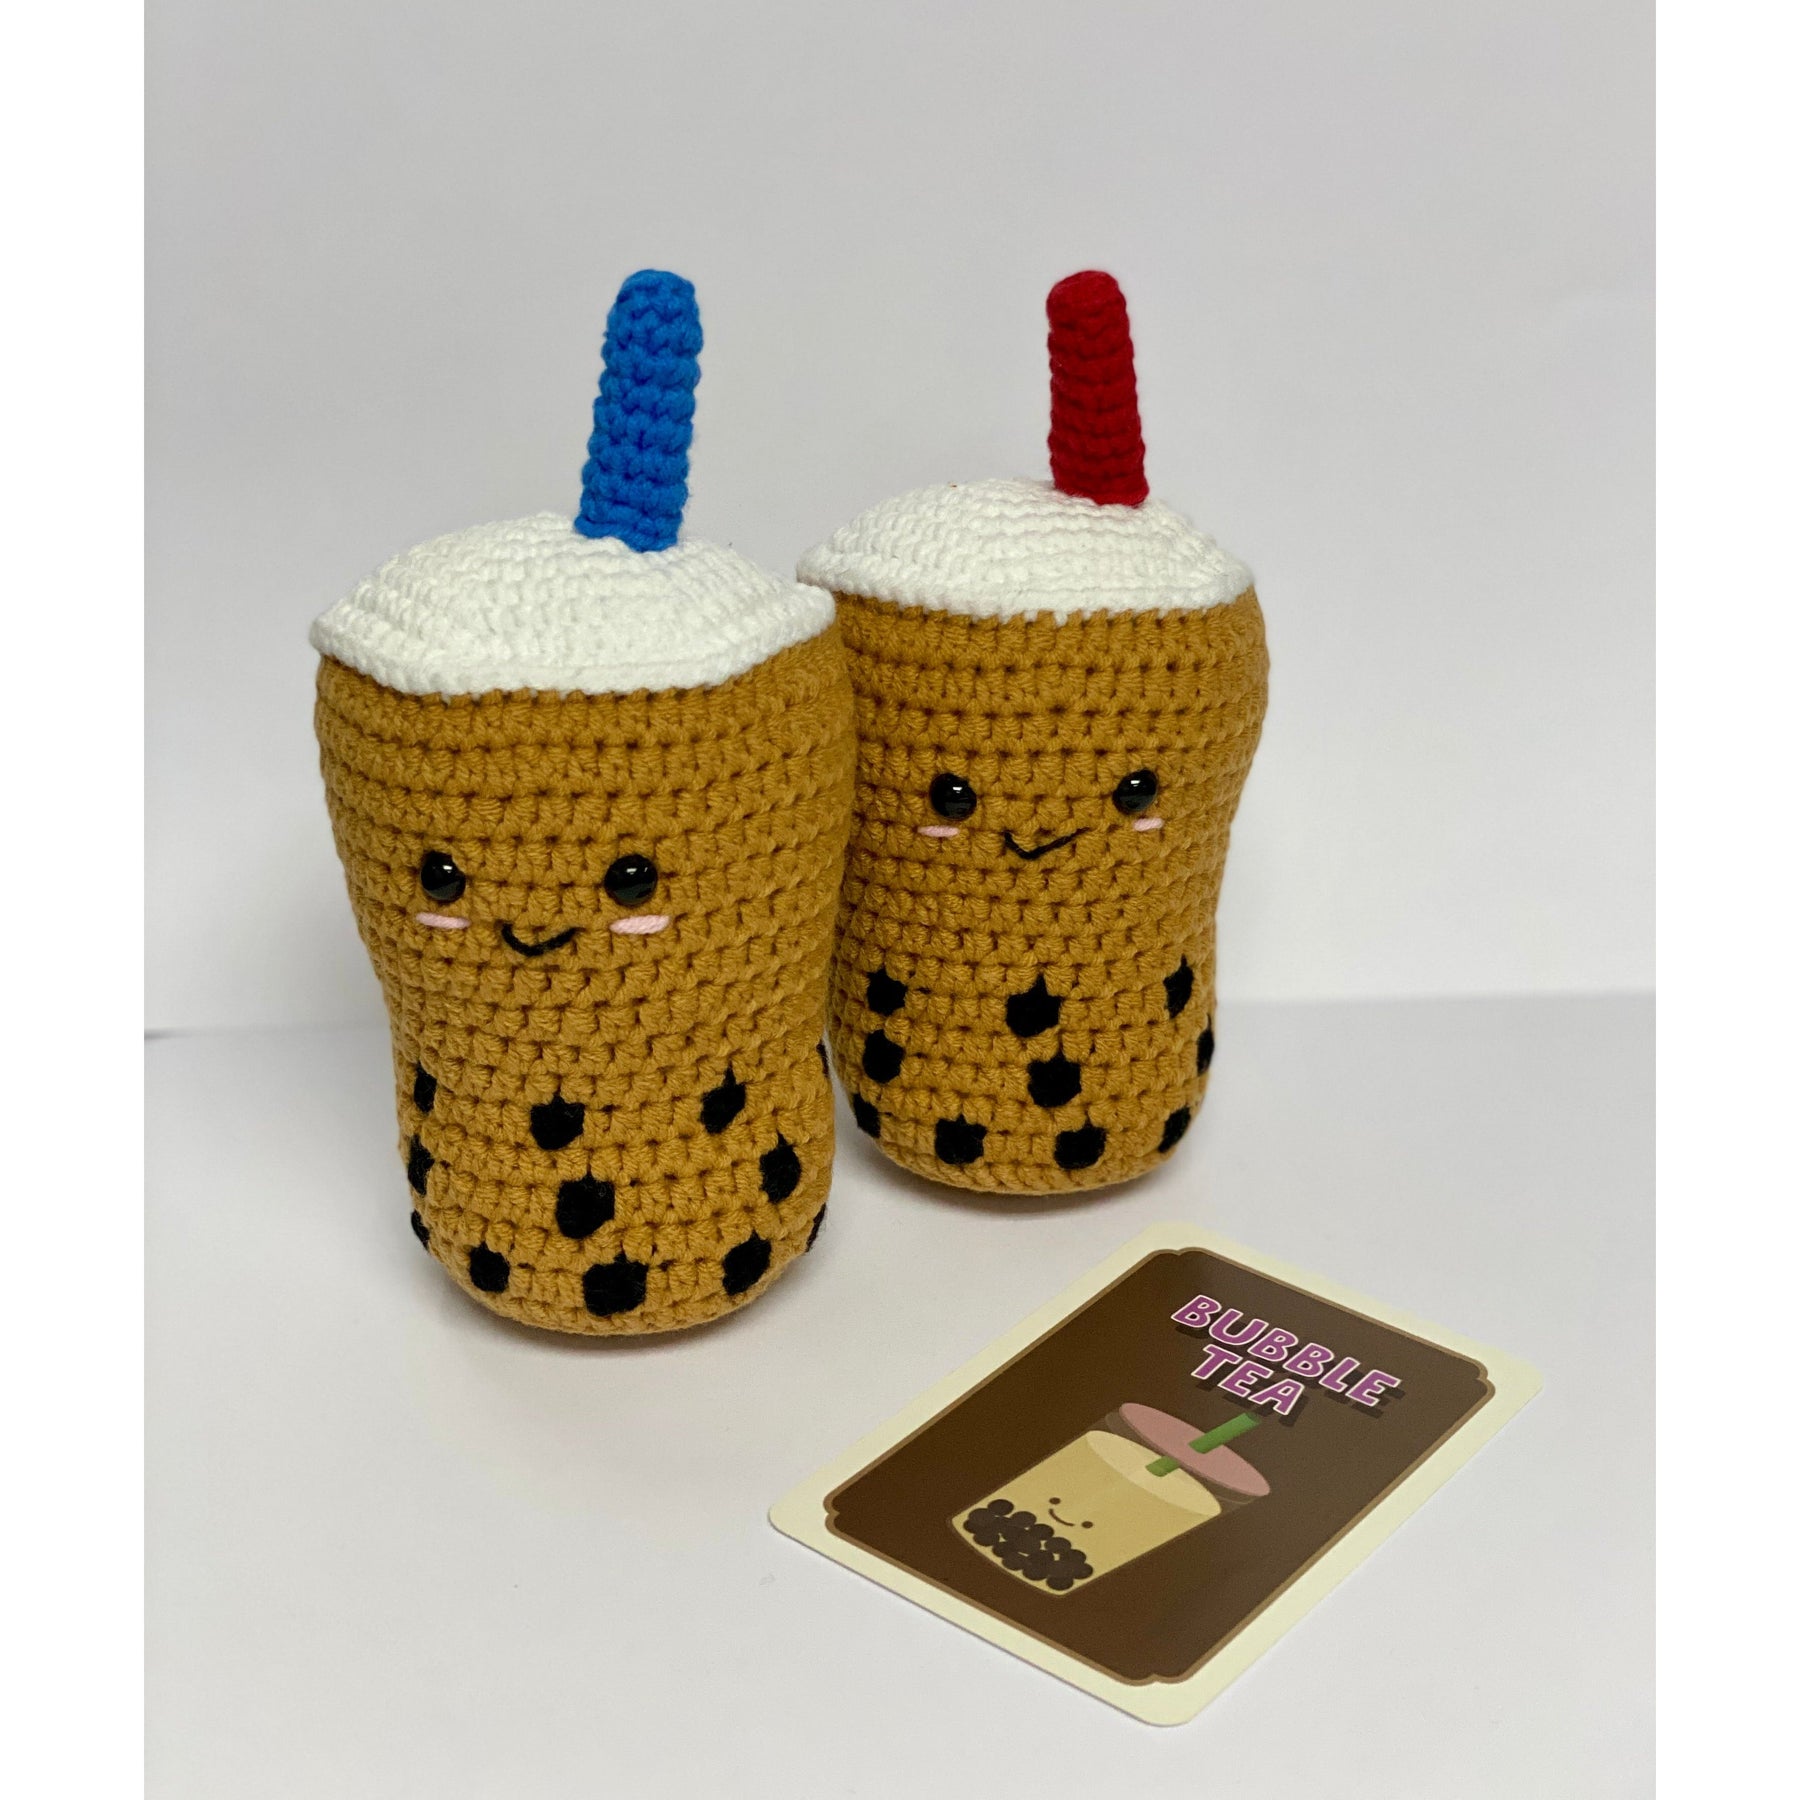 Grace's Creations Boba Tea plush crochet plushies at Treppie